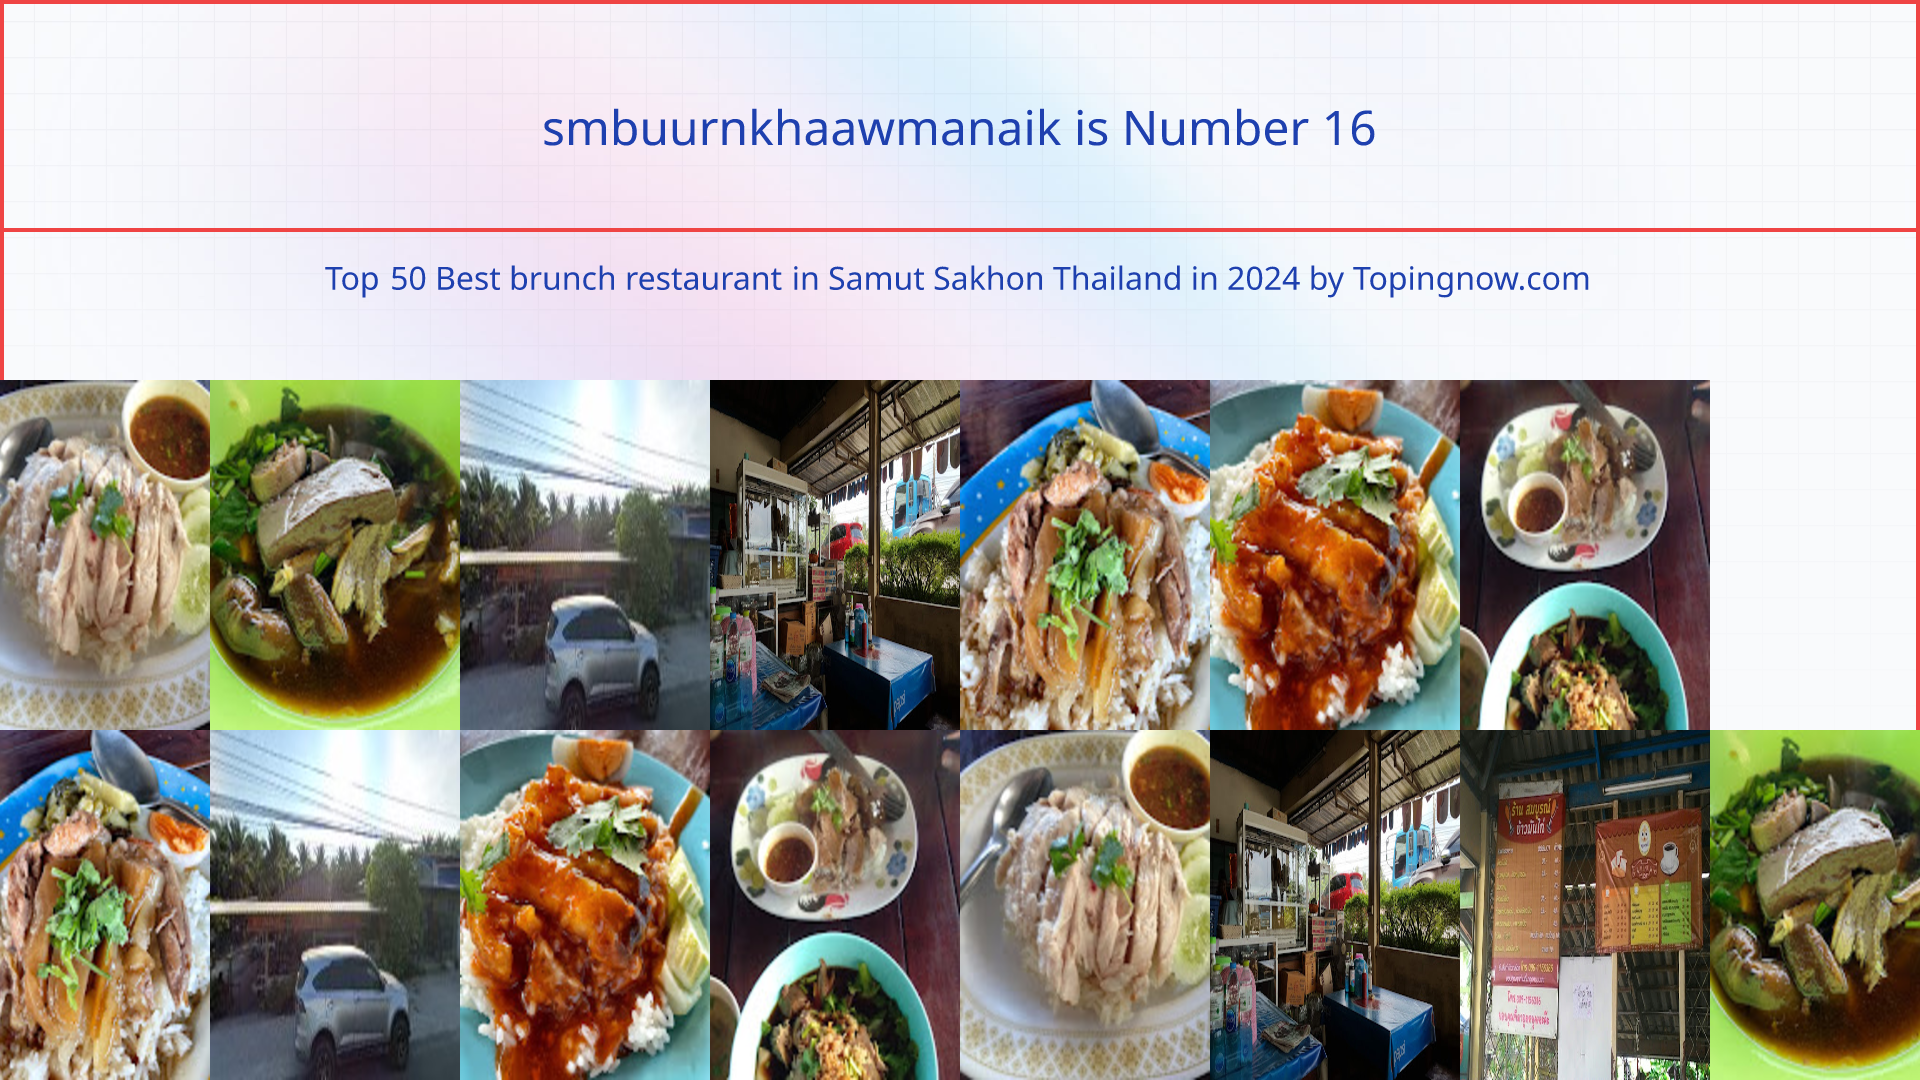 smbuurnkhaawmanaik: Top 50 Best brunch restaurant in Samut Sakhon Thailand in 2024